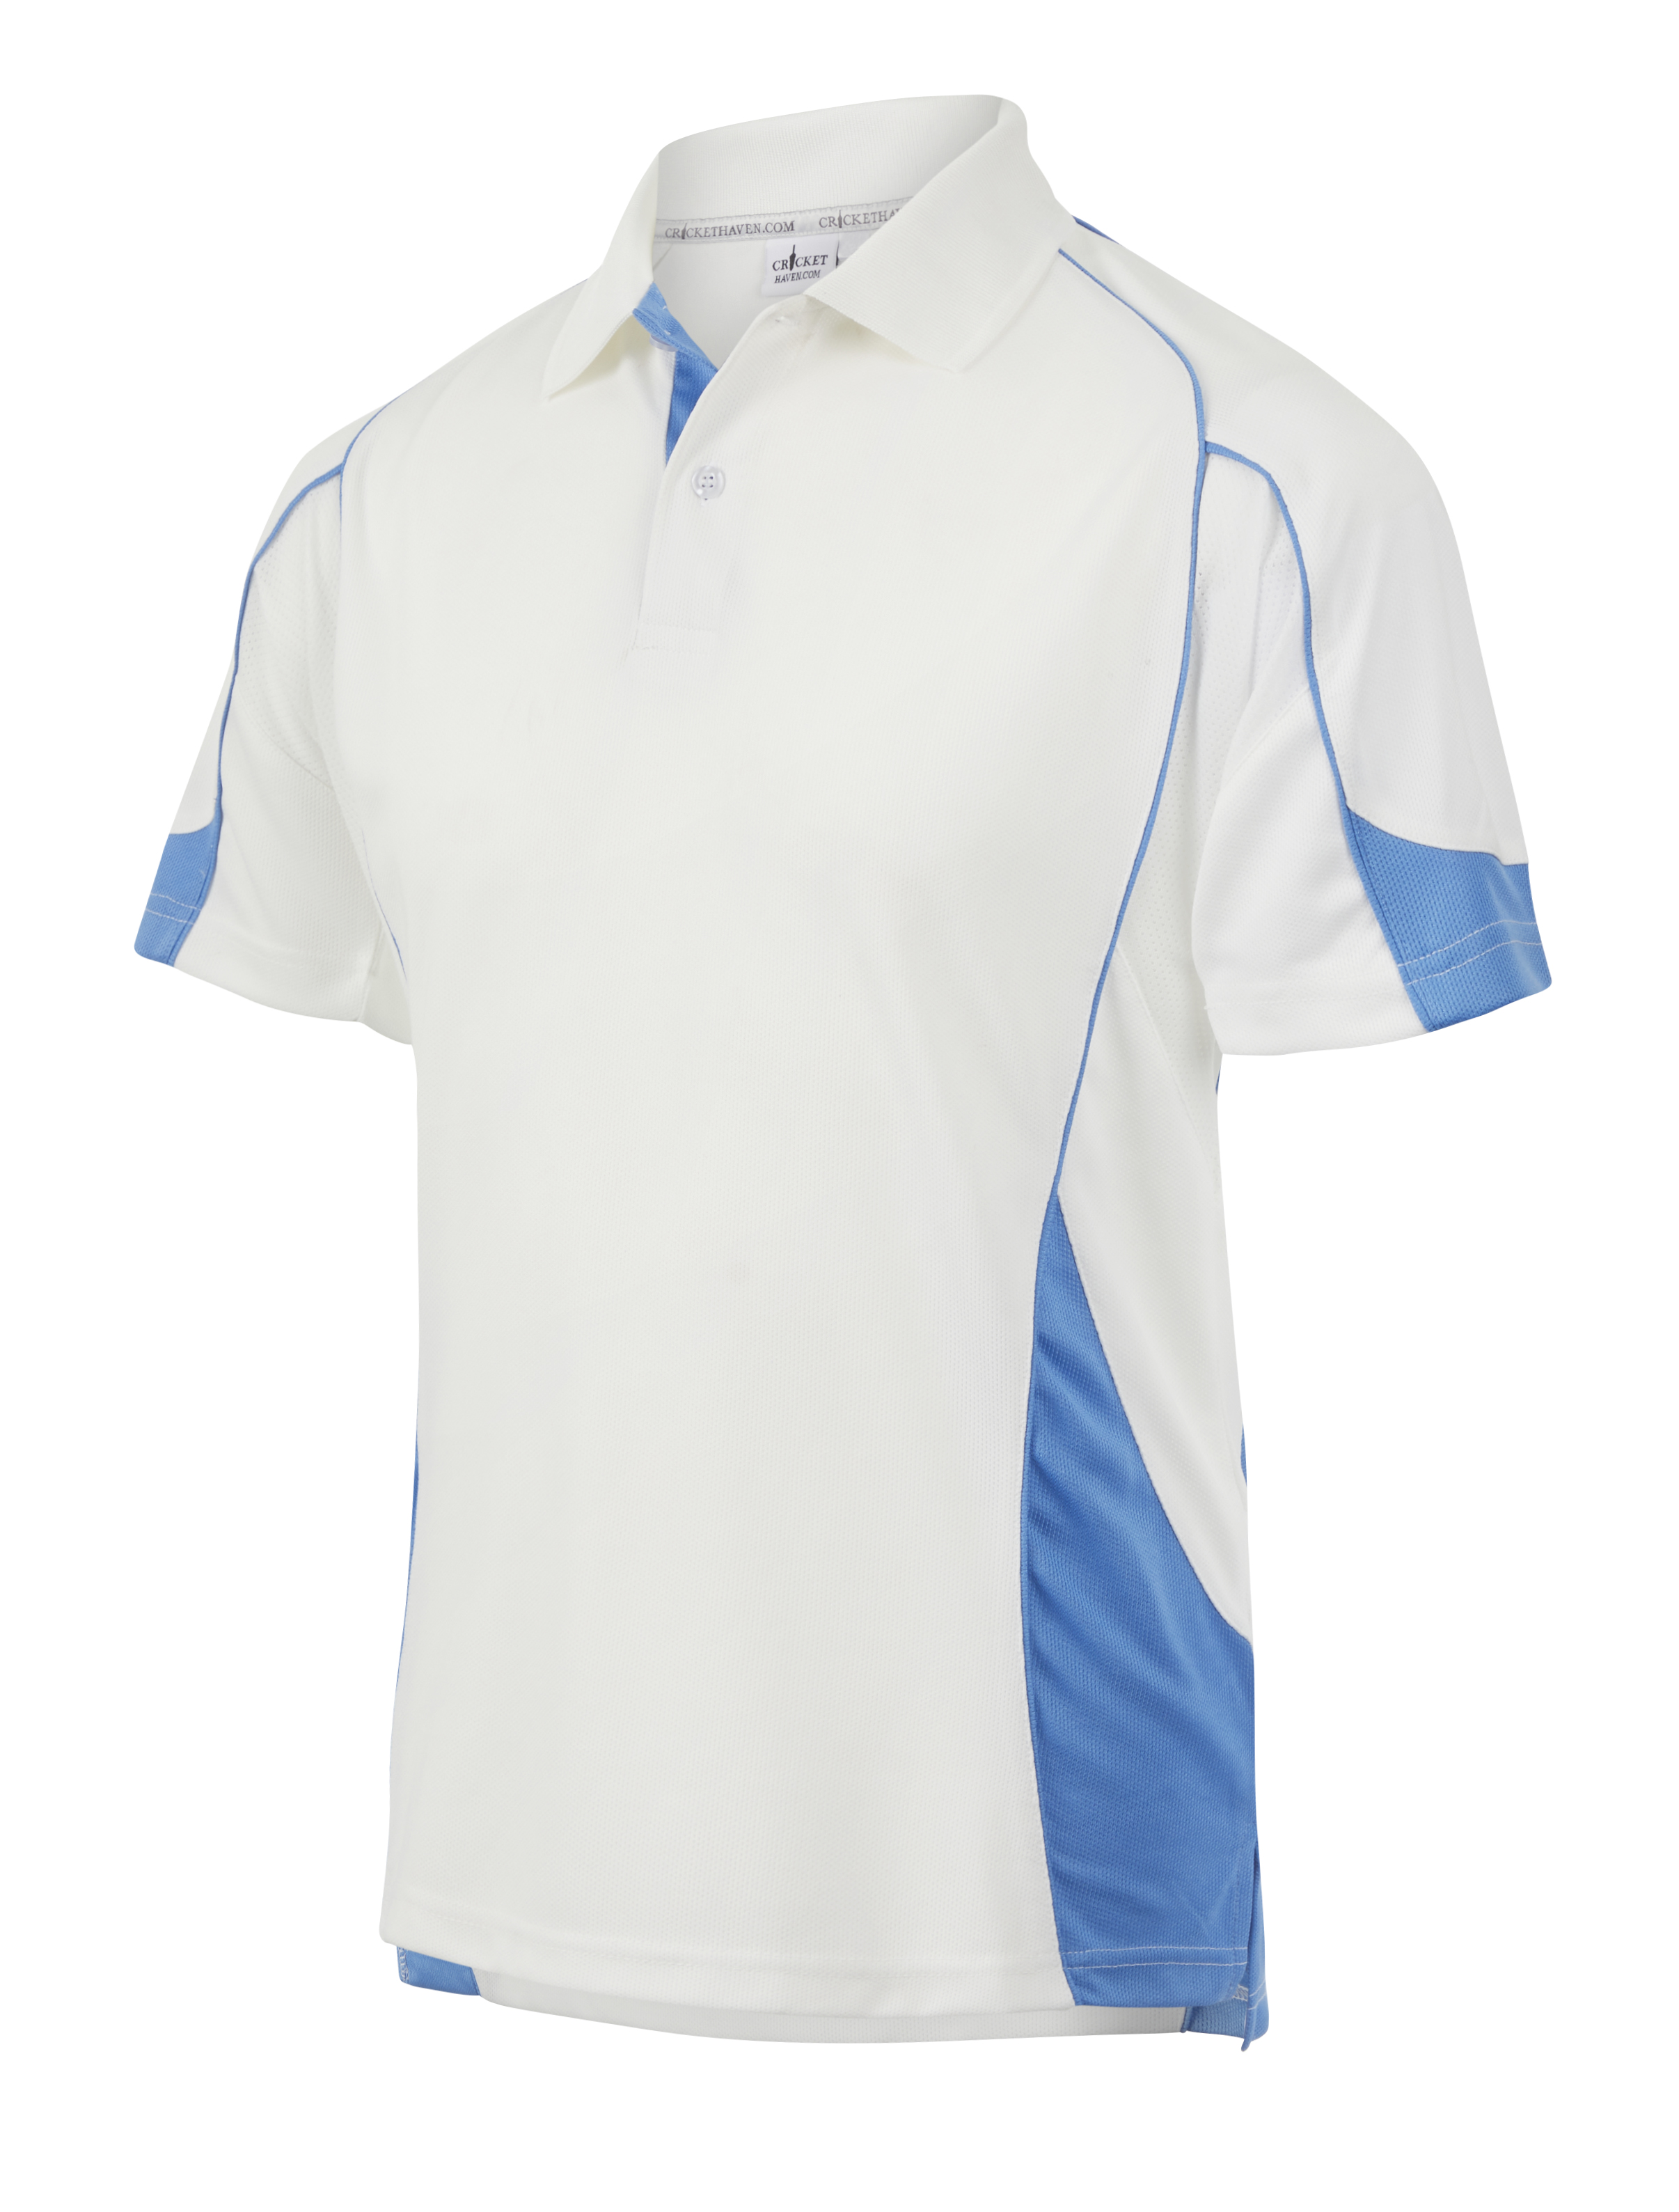 white colour cricket jersey